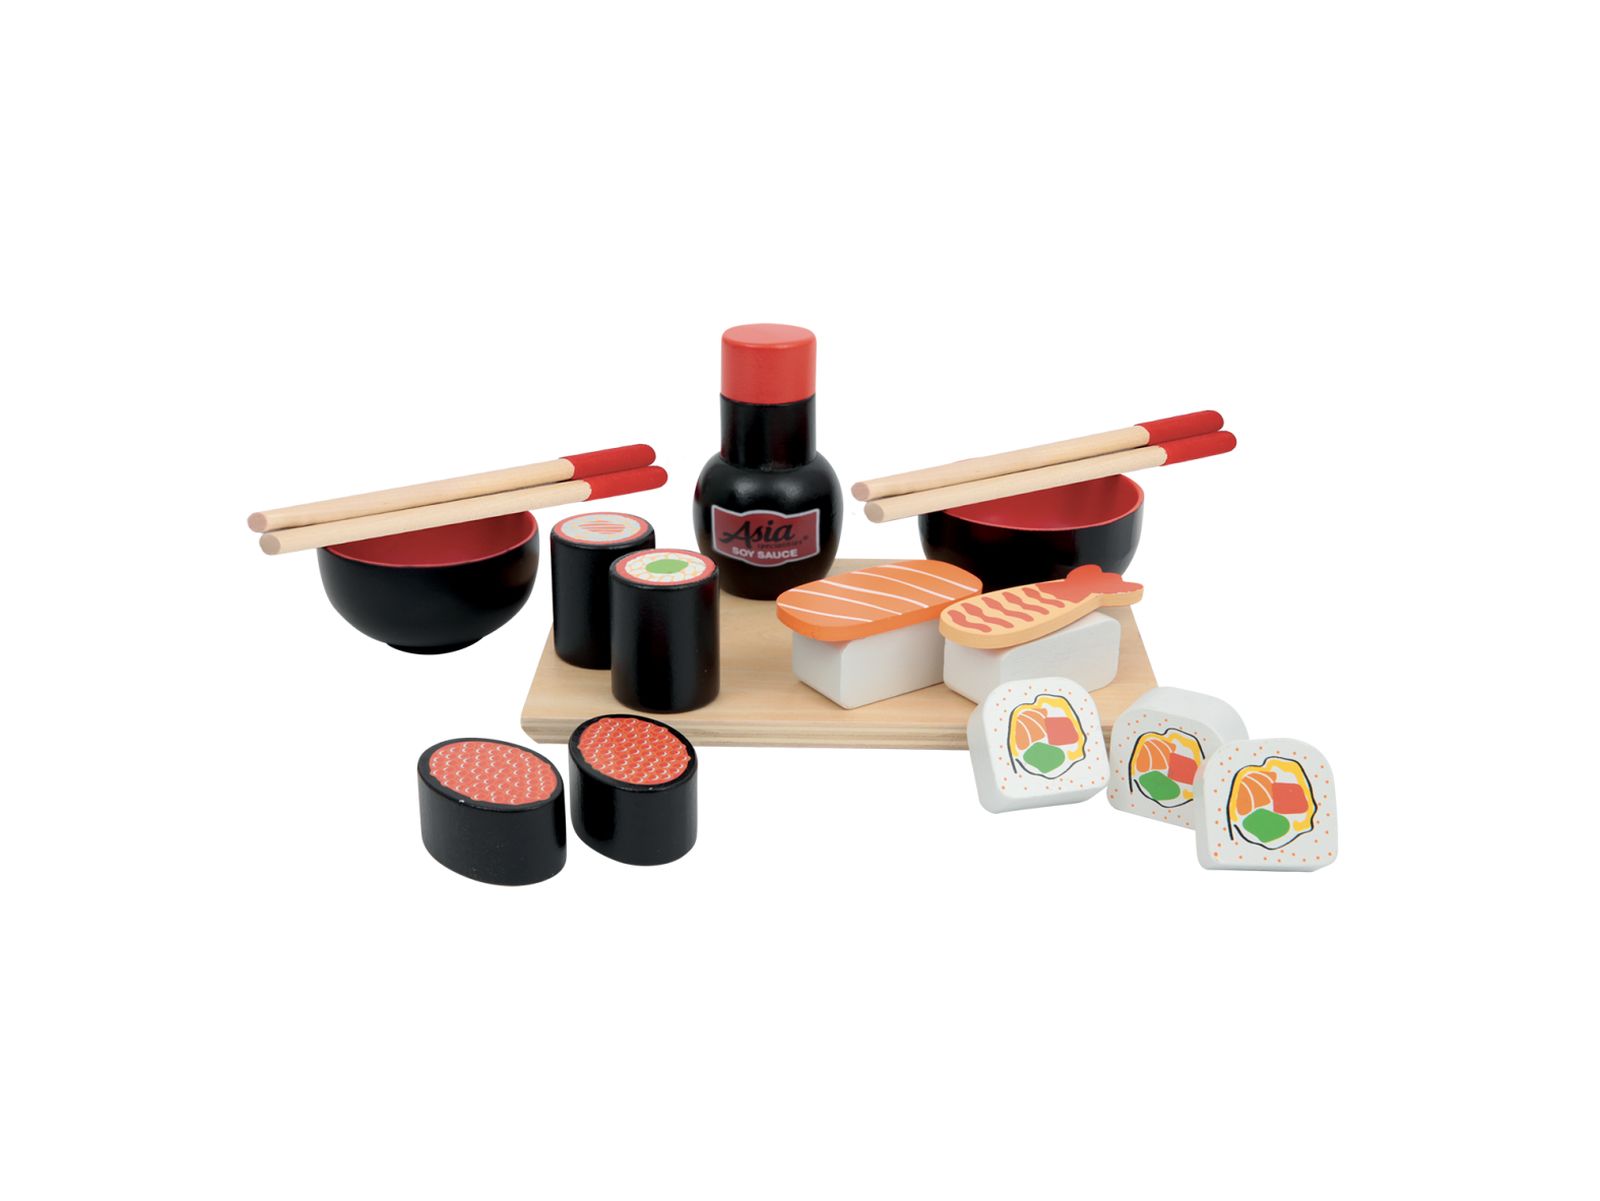 Sushi set - WOOD 'N' PLAY